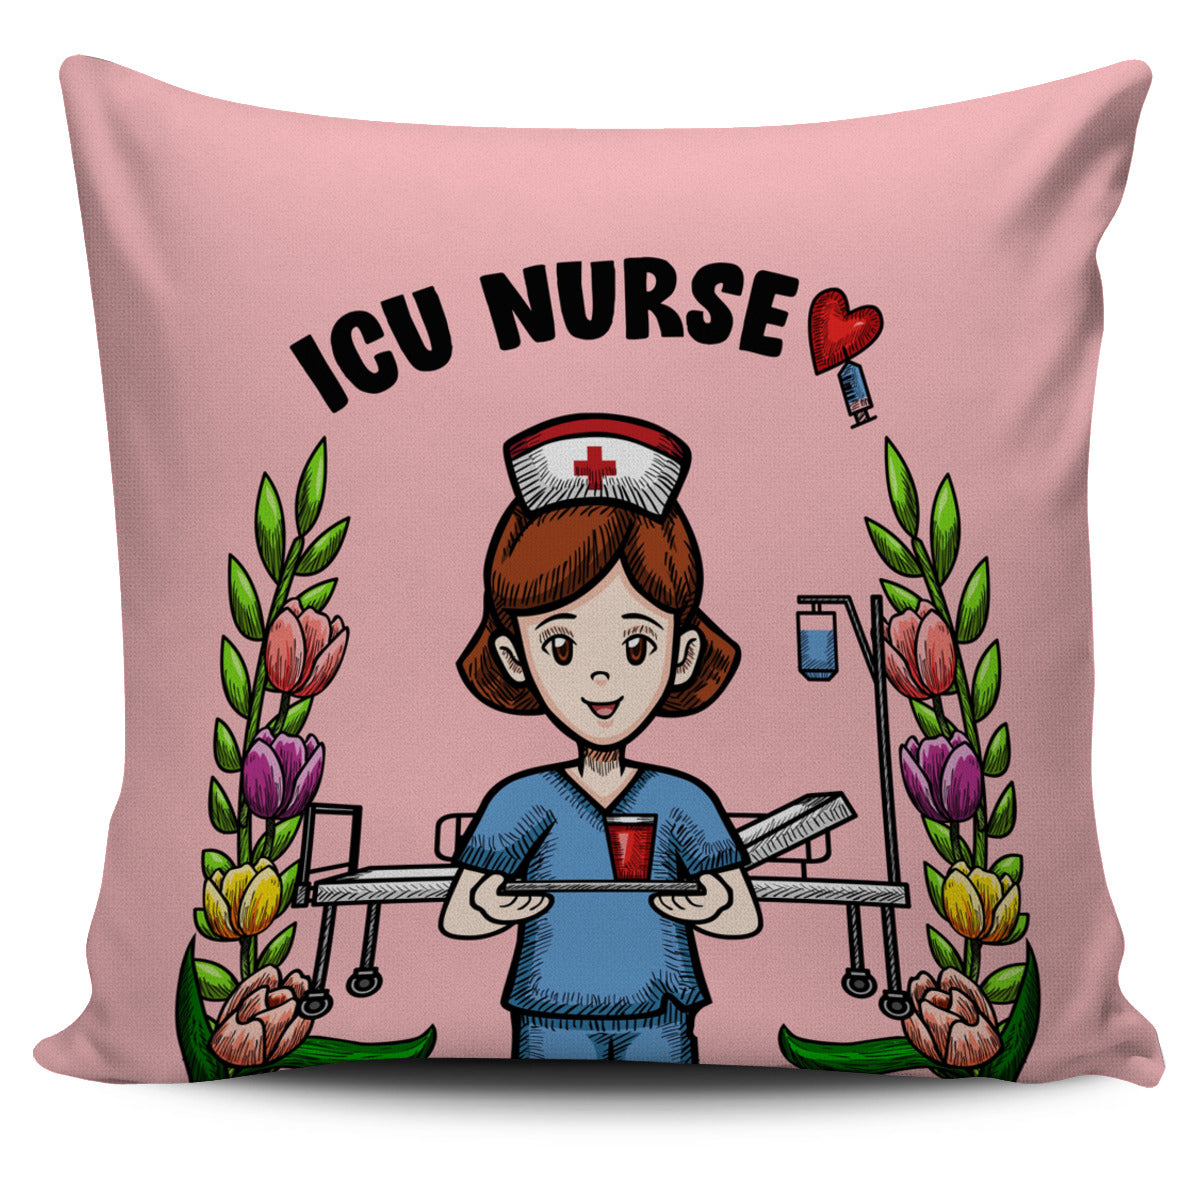 ICU Nurse Pillow Cover